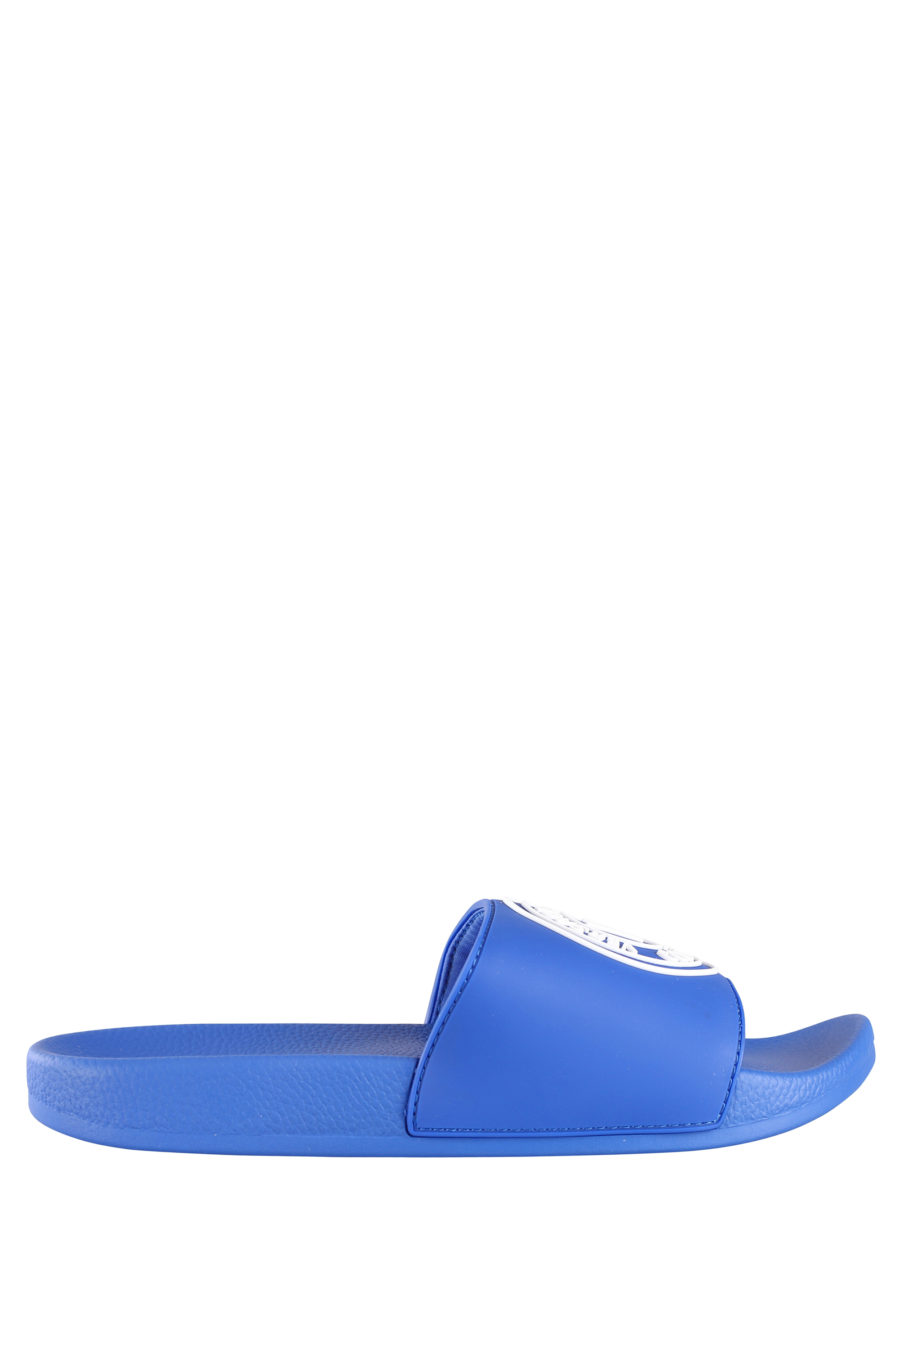 Blue flip flops with circle logo - IMG 9665